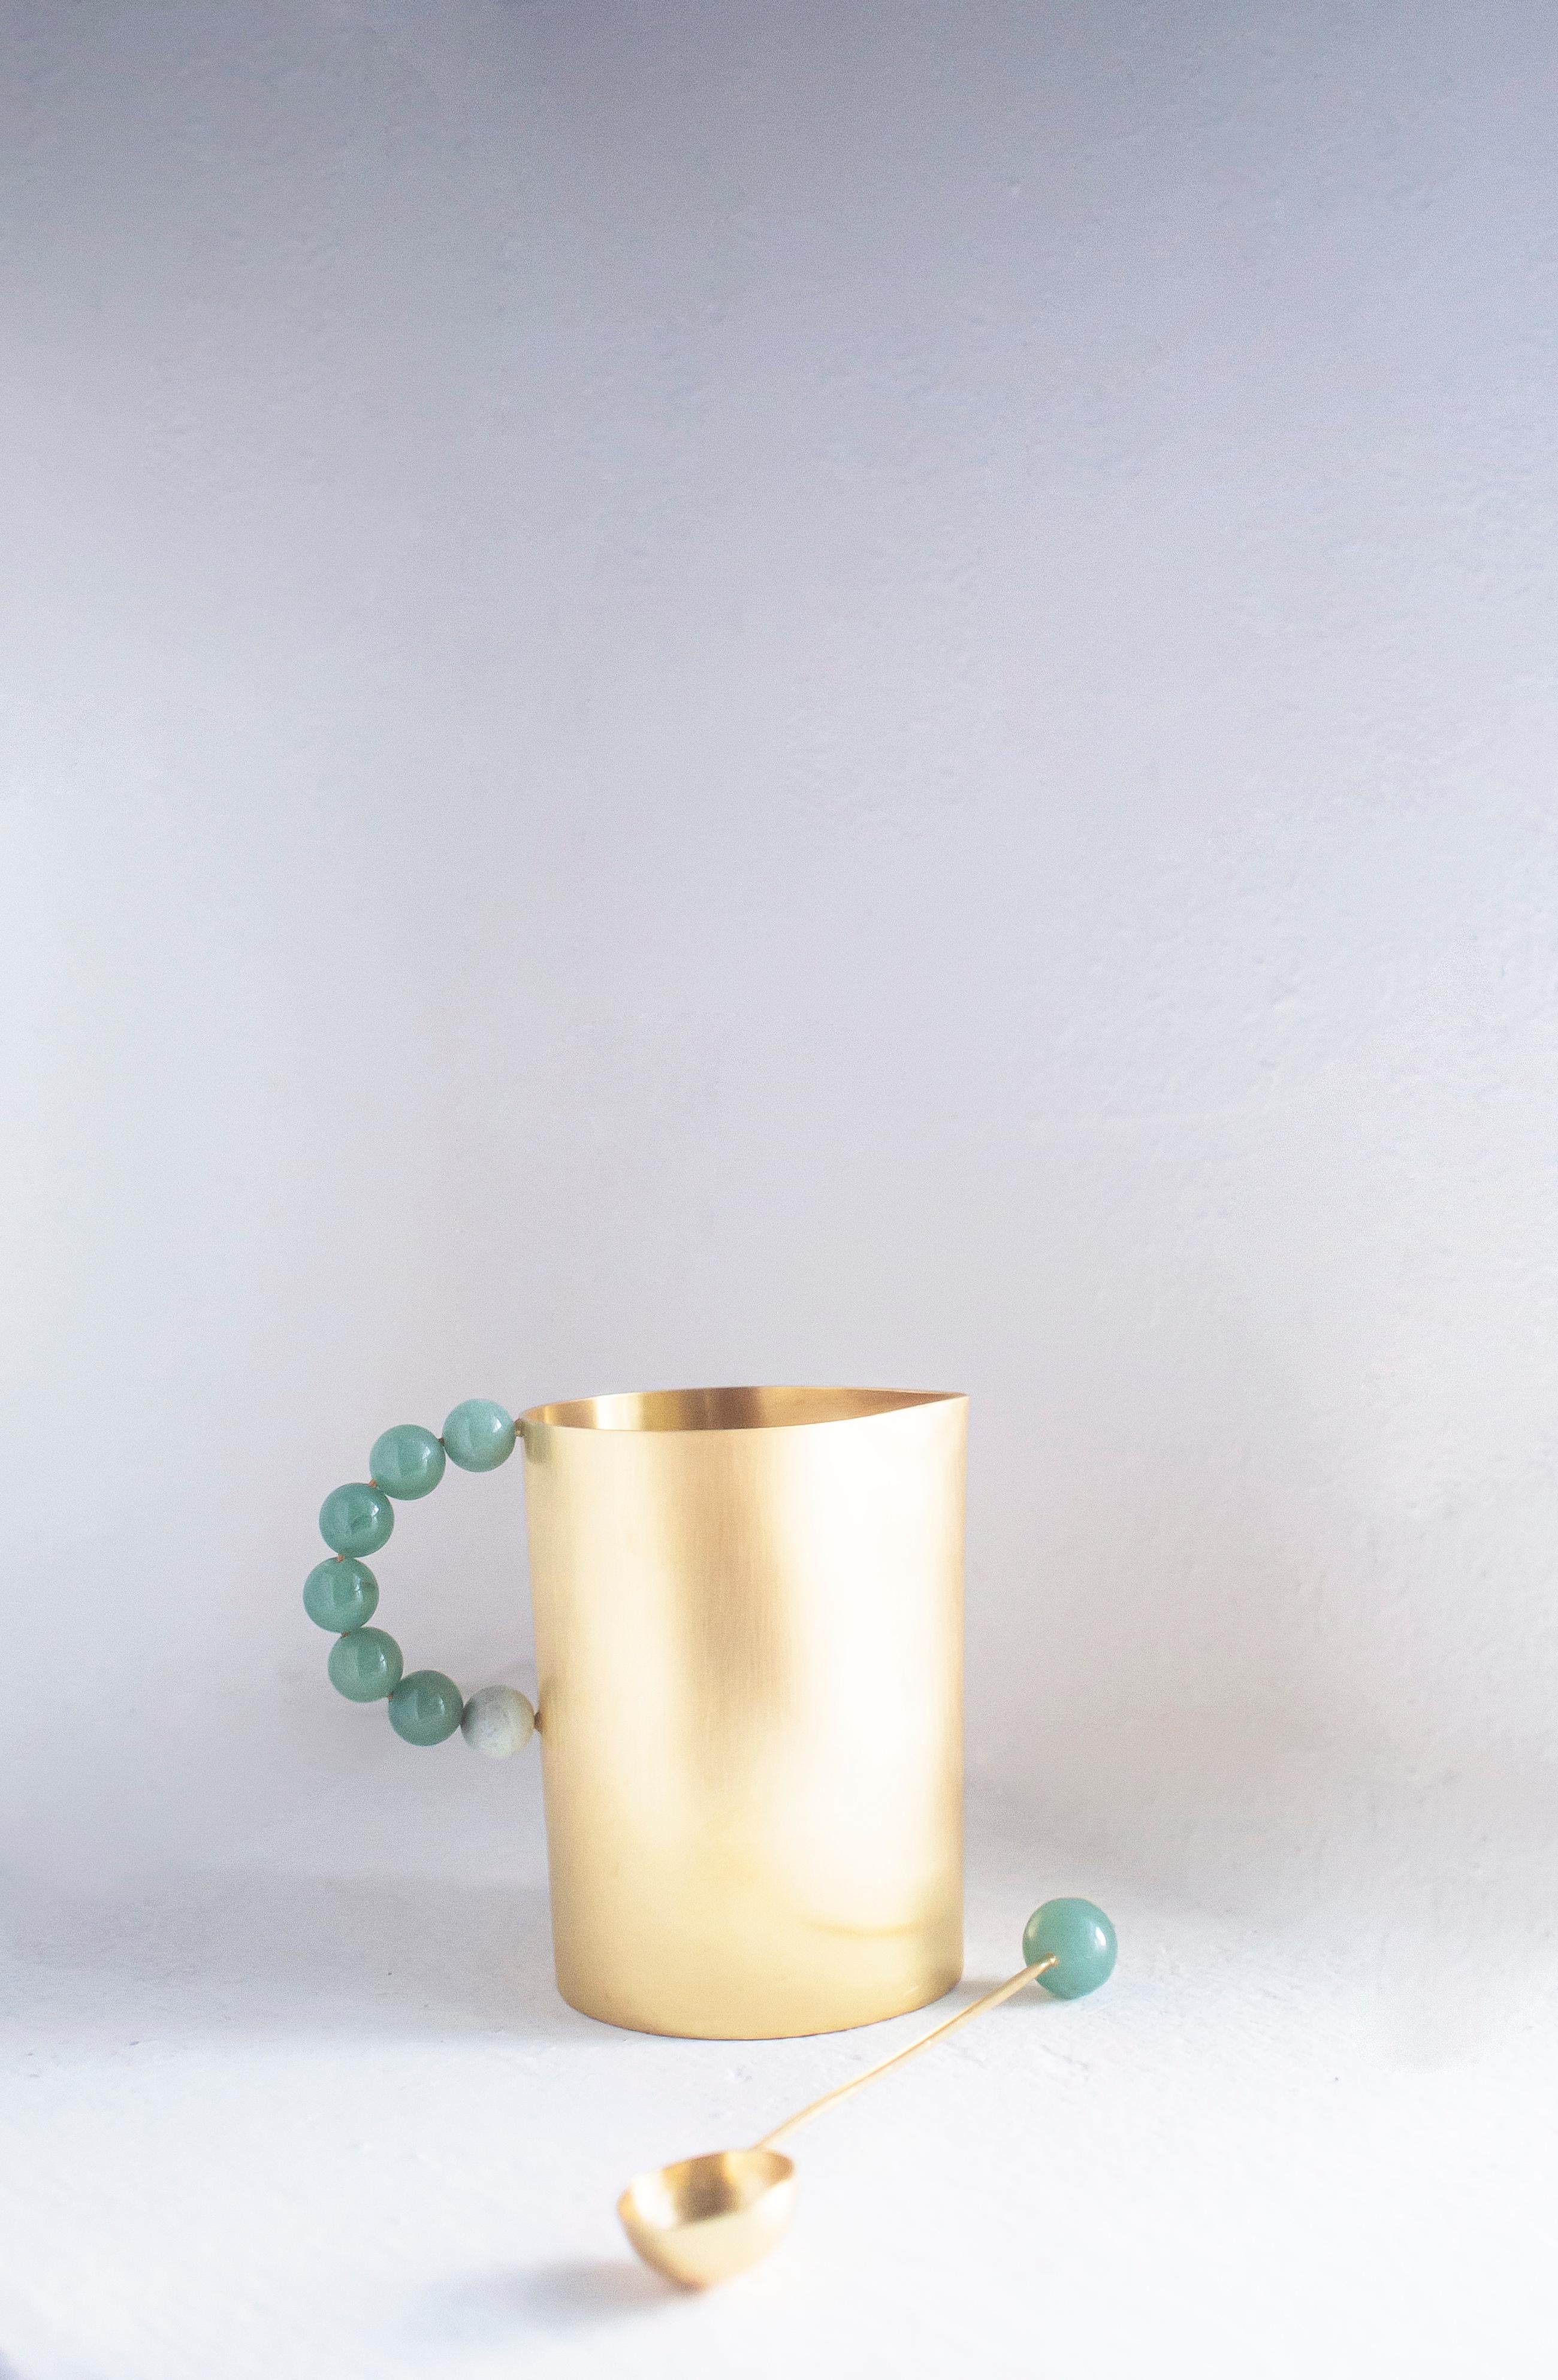 Hand-Crafted Contemporary Gold Plated Green Quartz Stone Milk Container by Natalia Criado For Sale